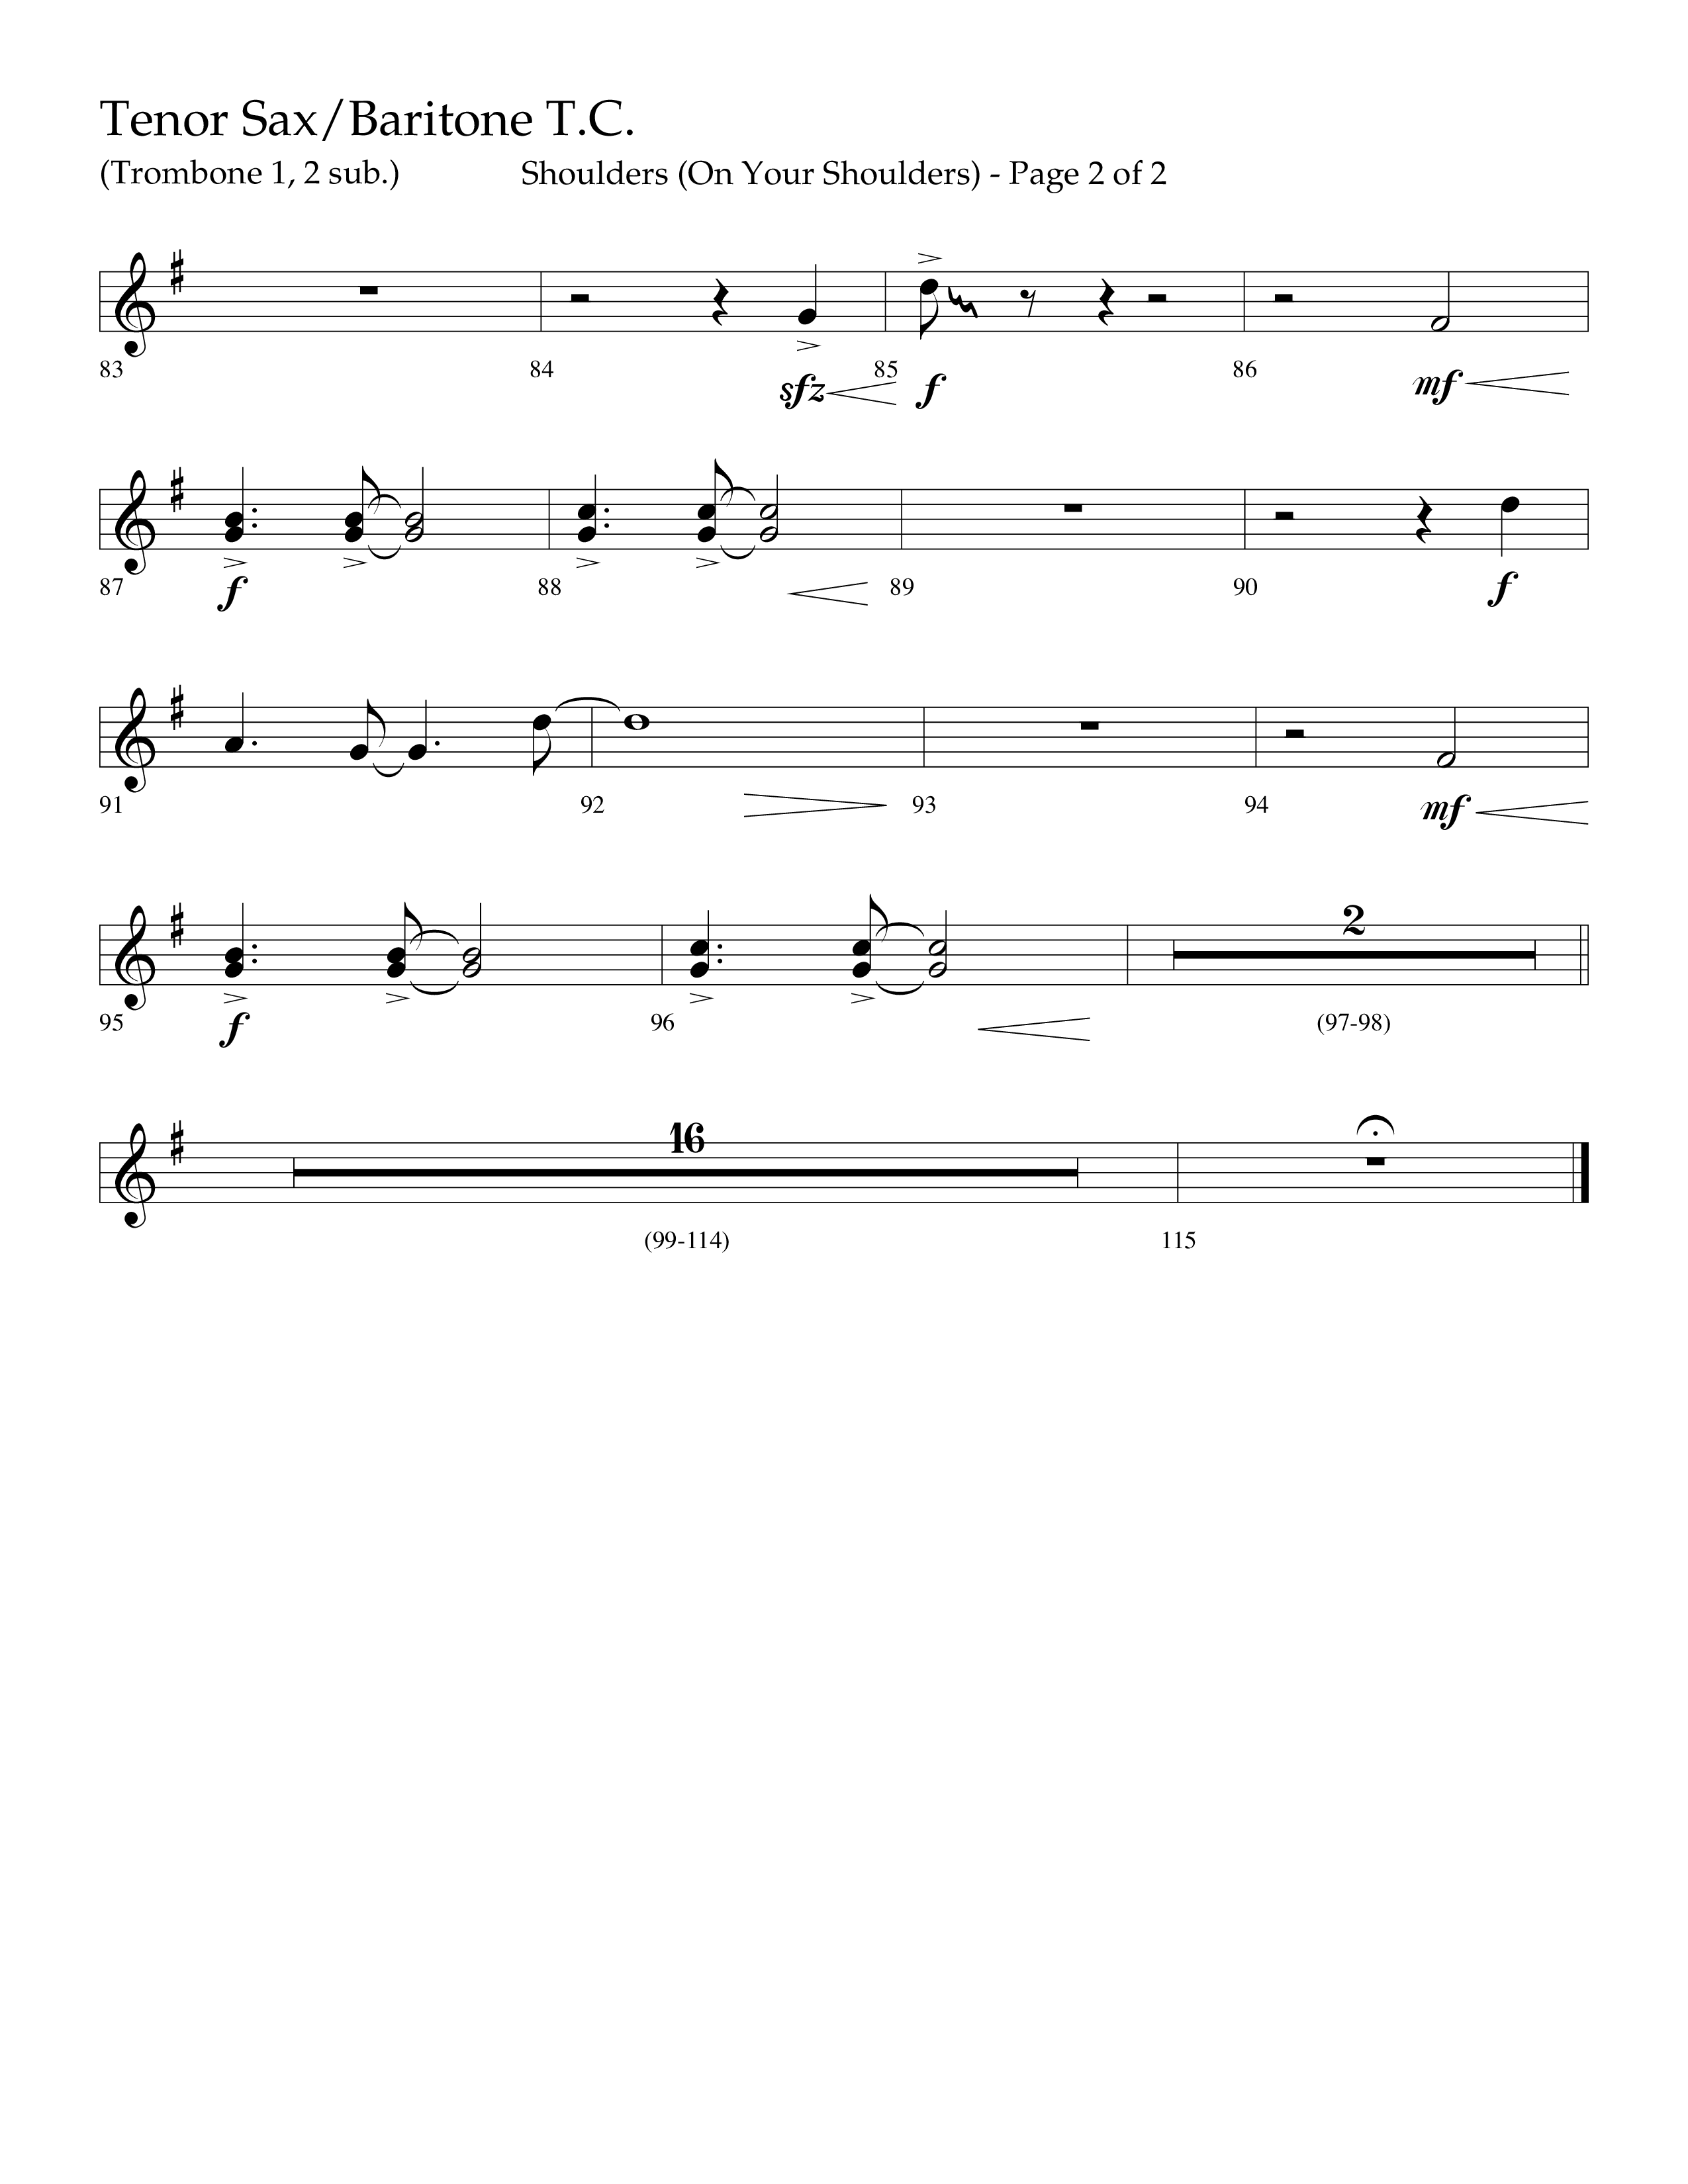 Shoulders (Choral Anthem SATB) Tenor Sax/Baritone T.C. (Lifeway Choral / Arr. Cliff Duren)